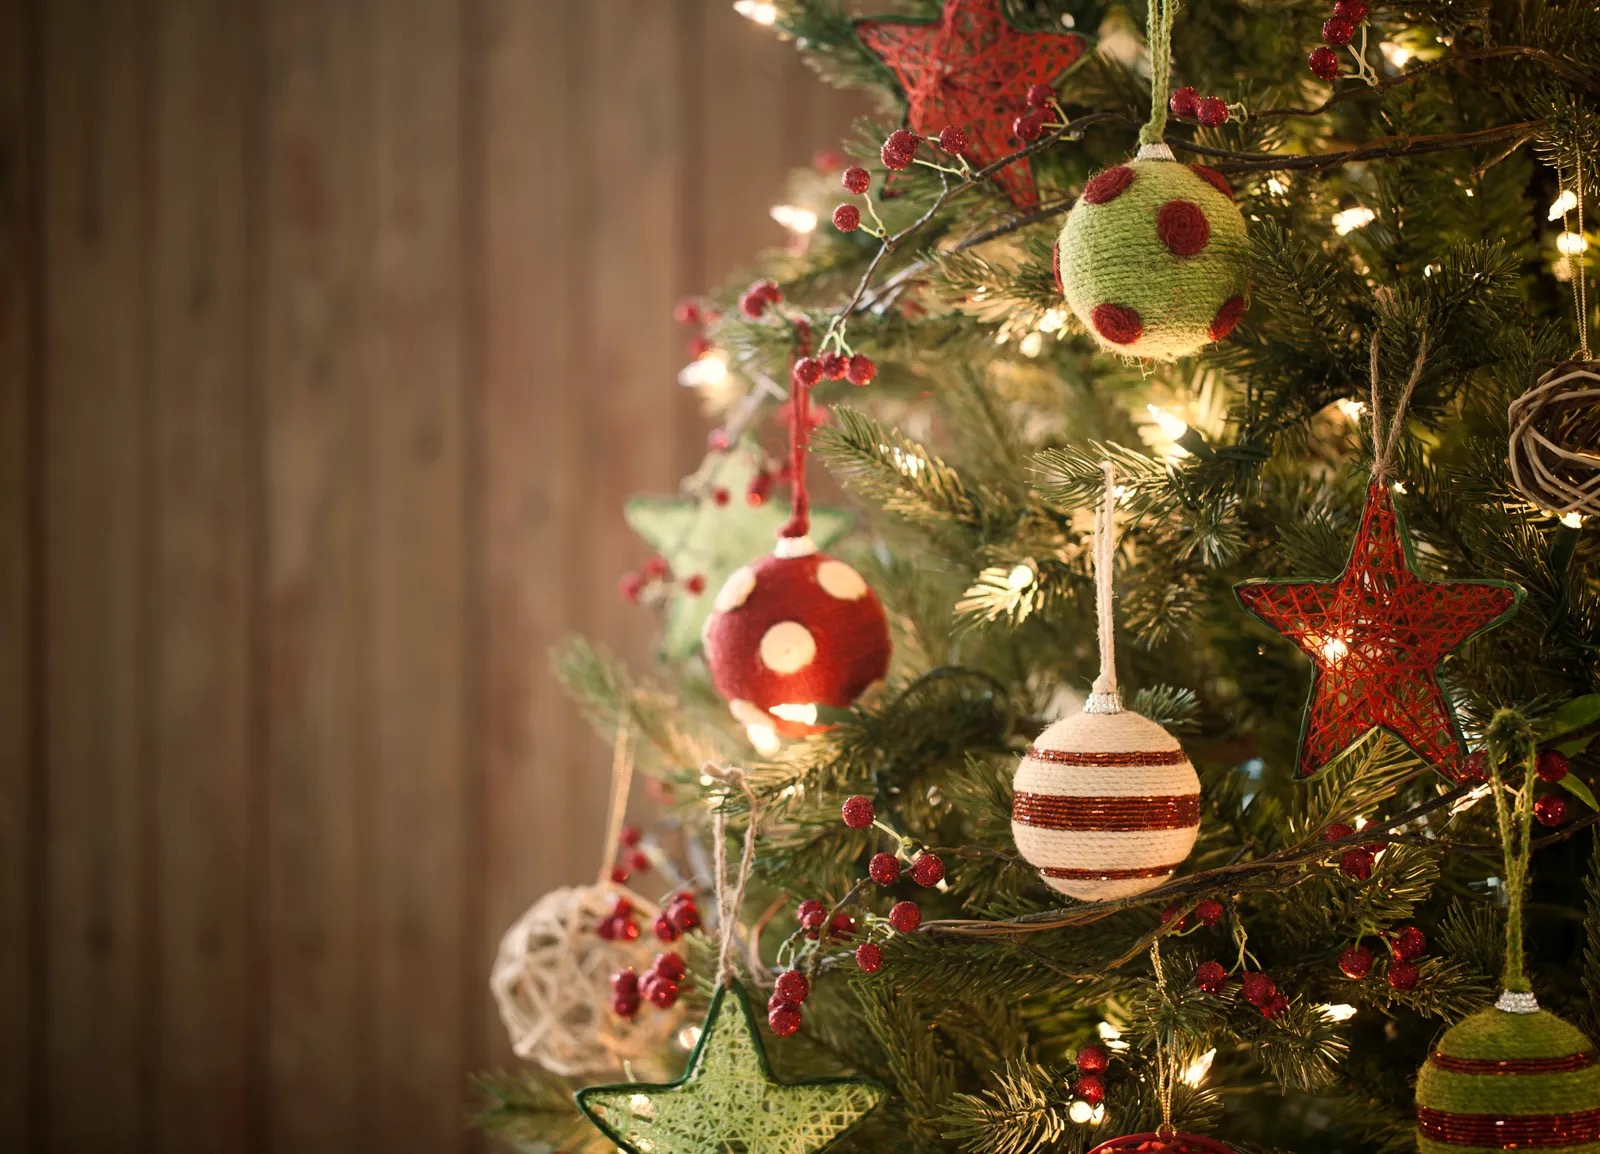 Christmas Trivia Questions Quiz Christmas tree decorations